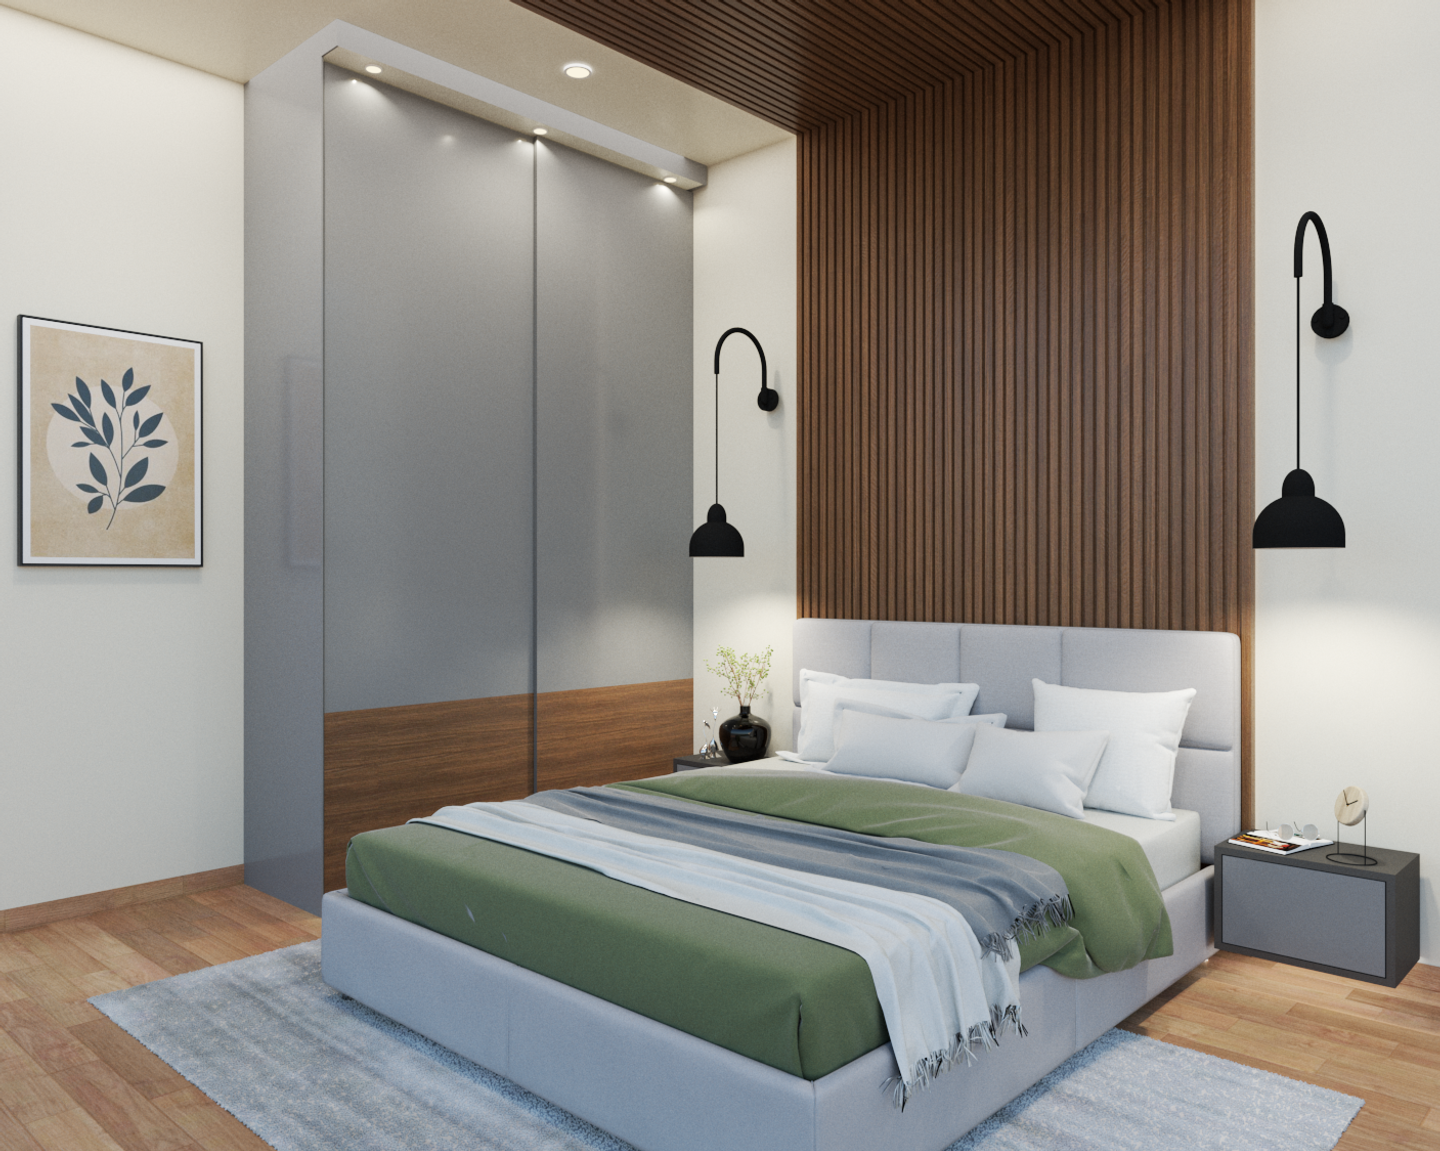 Grey and Wood Bedroom Design - Livspace